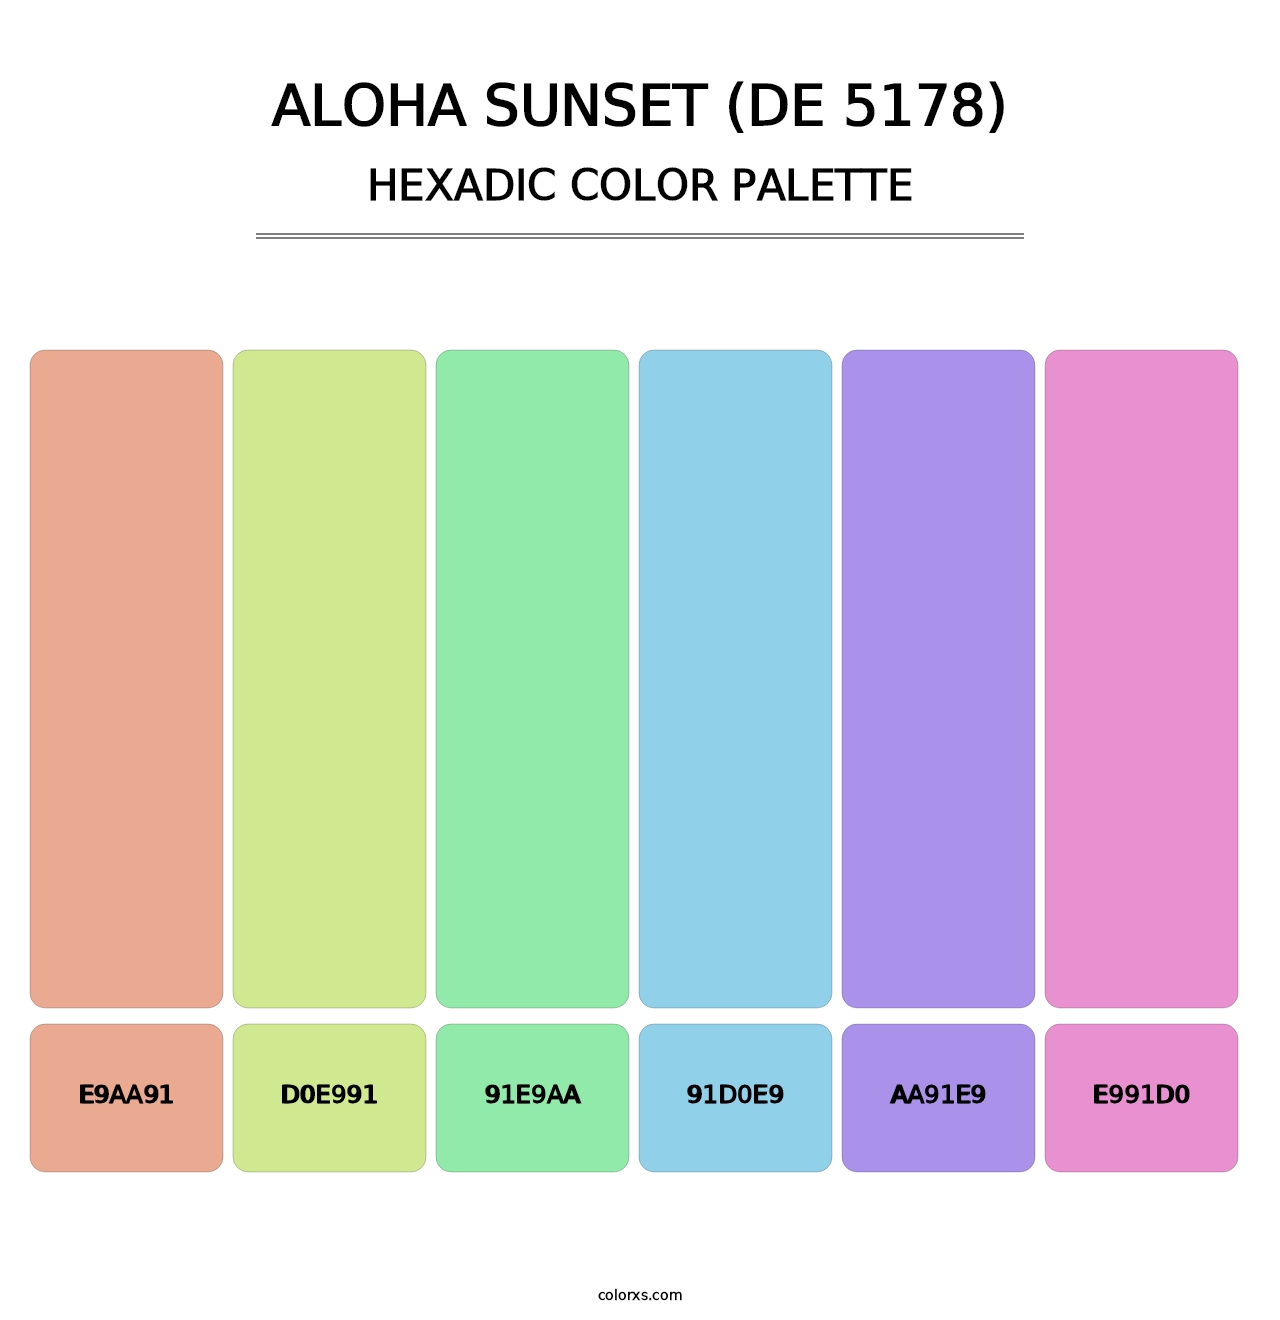 Aloha Sunset (DE 5178) - Hexadic Color Palette